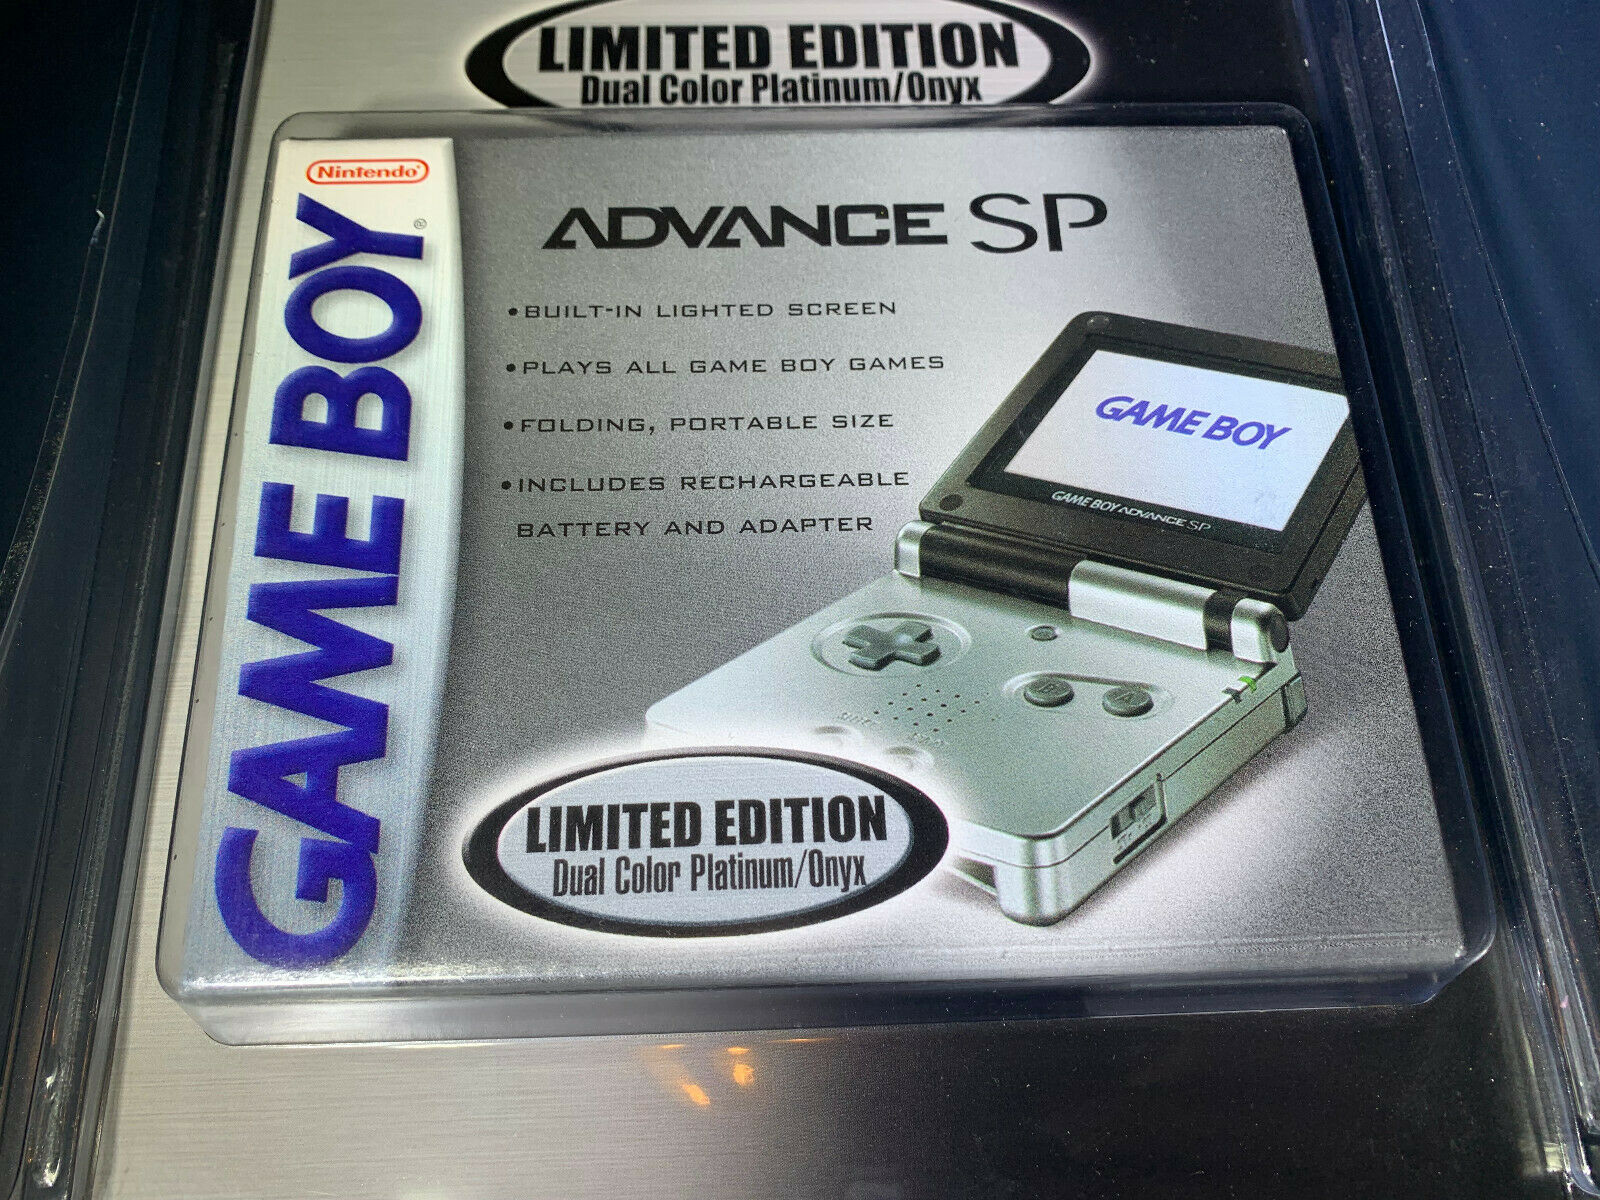 Game Boy Advance SP Platinum/Onyx